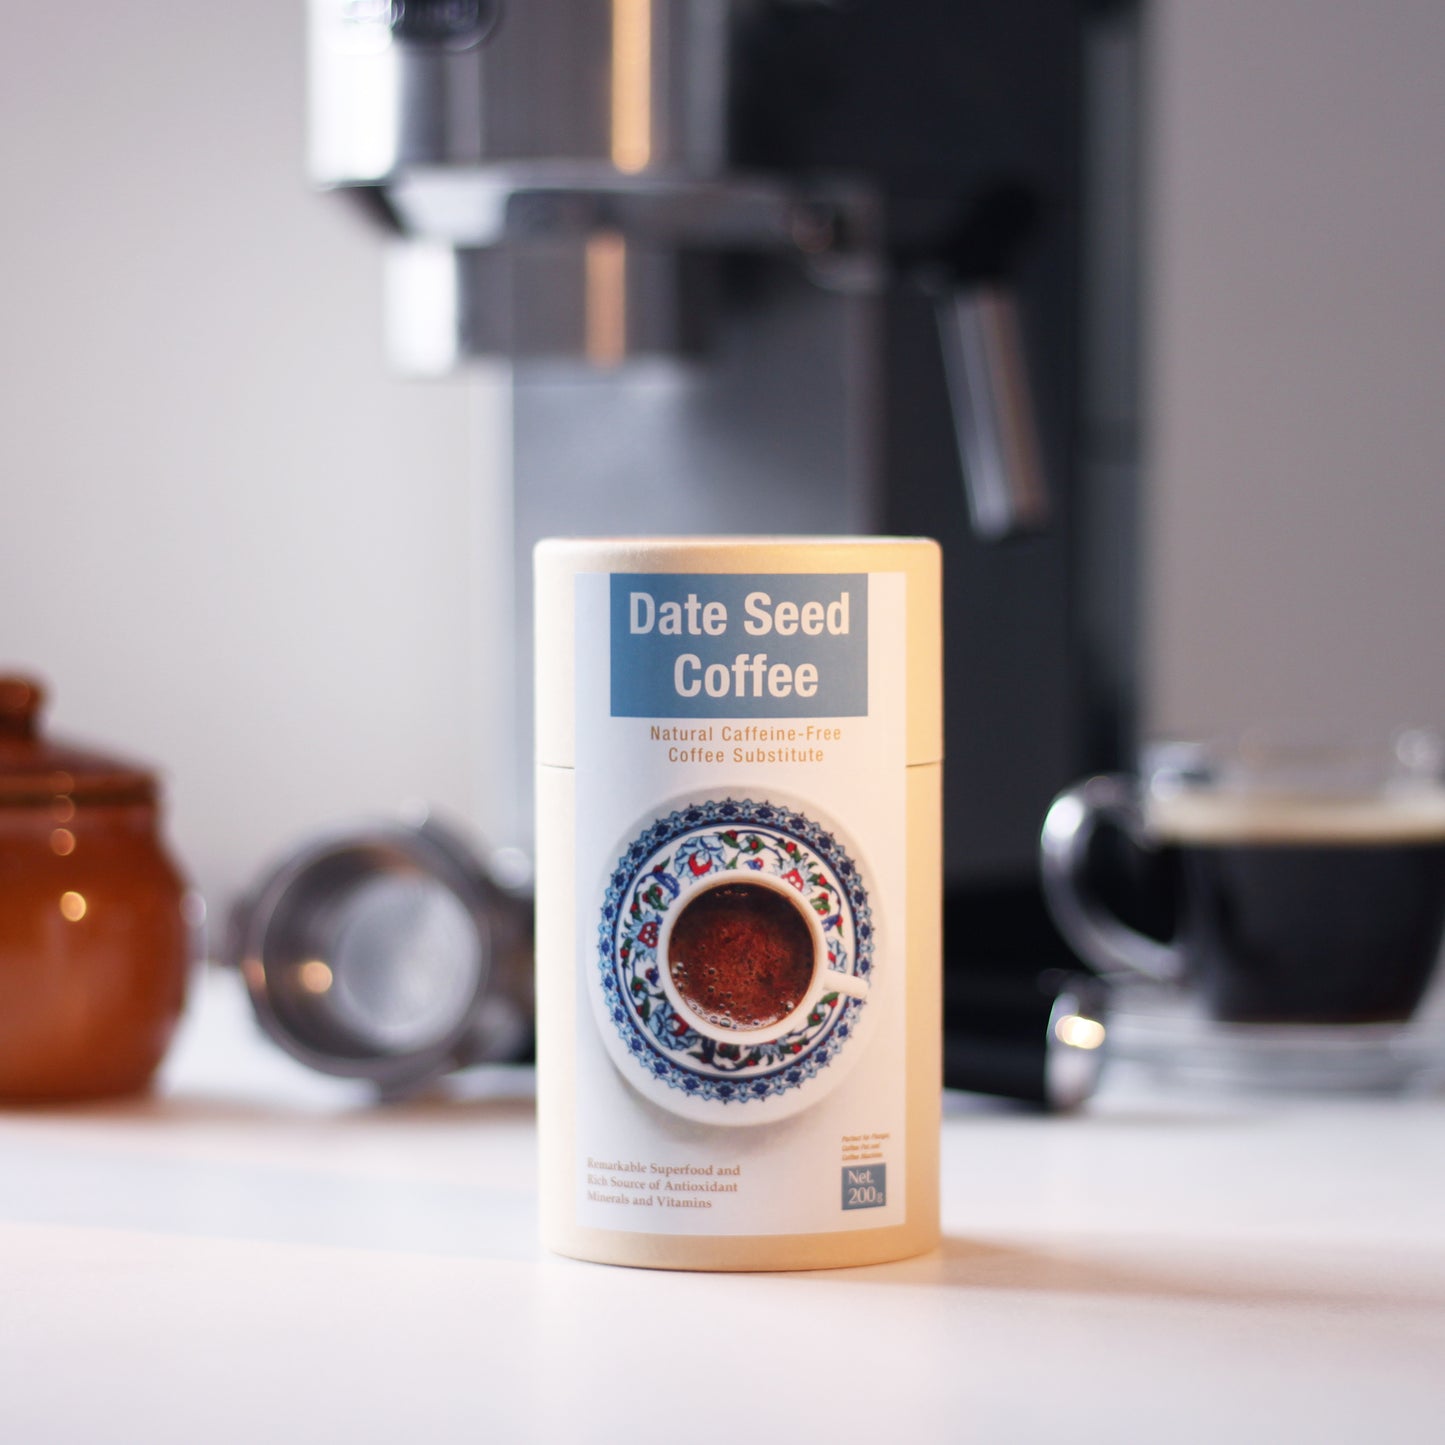 Date Seed Coffee (Dark Roast): Caffeine Free natural Coffee Substitute